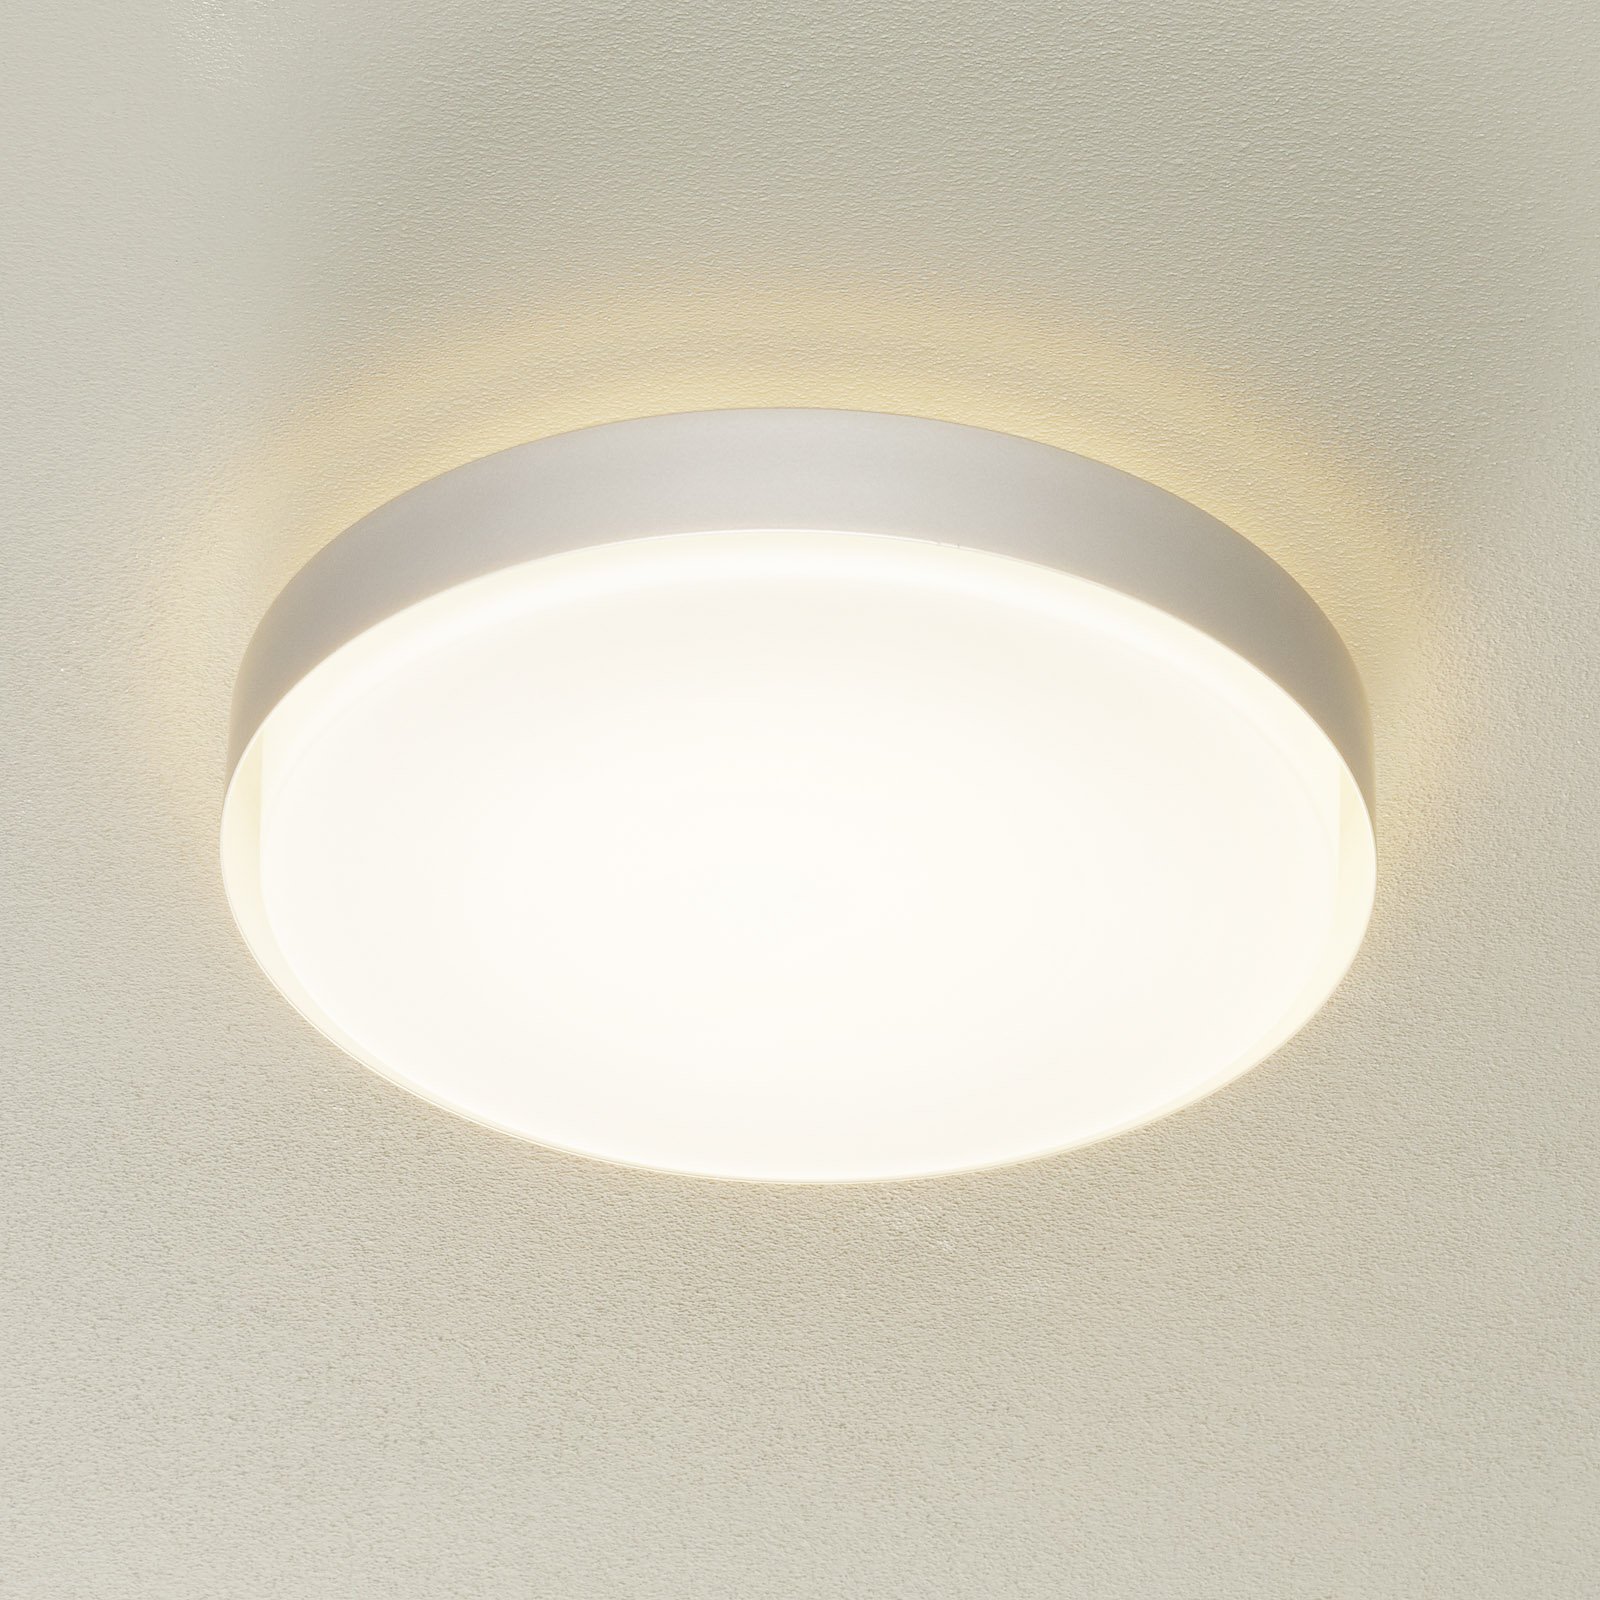 BEGA 34279 LED stropna svjetiljka, aluminij, Ø 42 cm, DALI